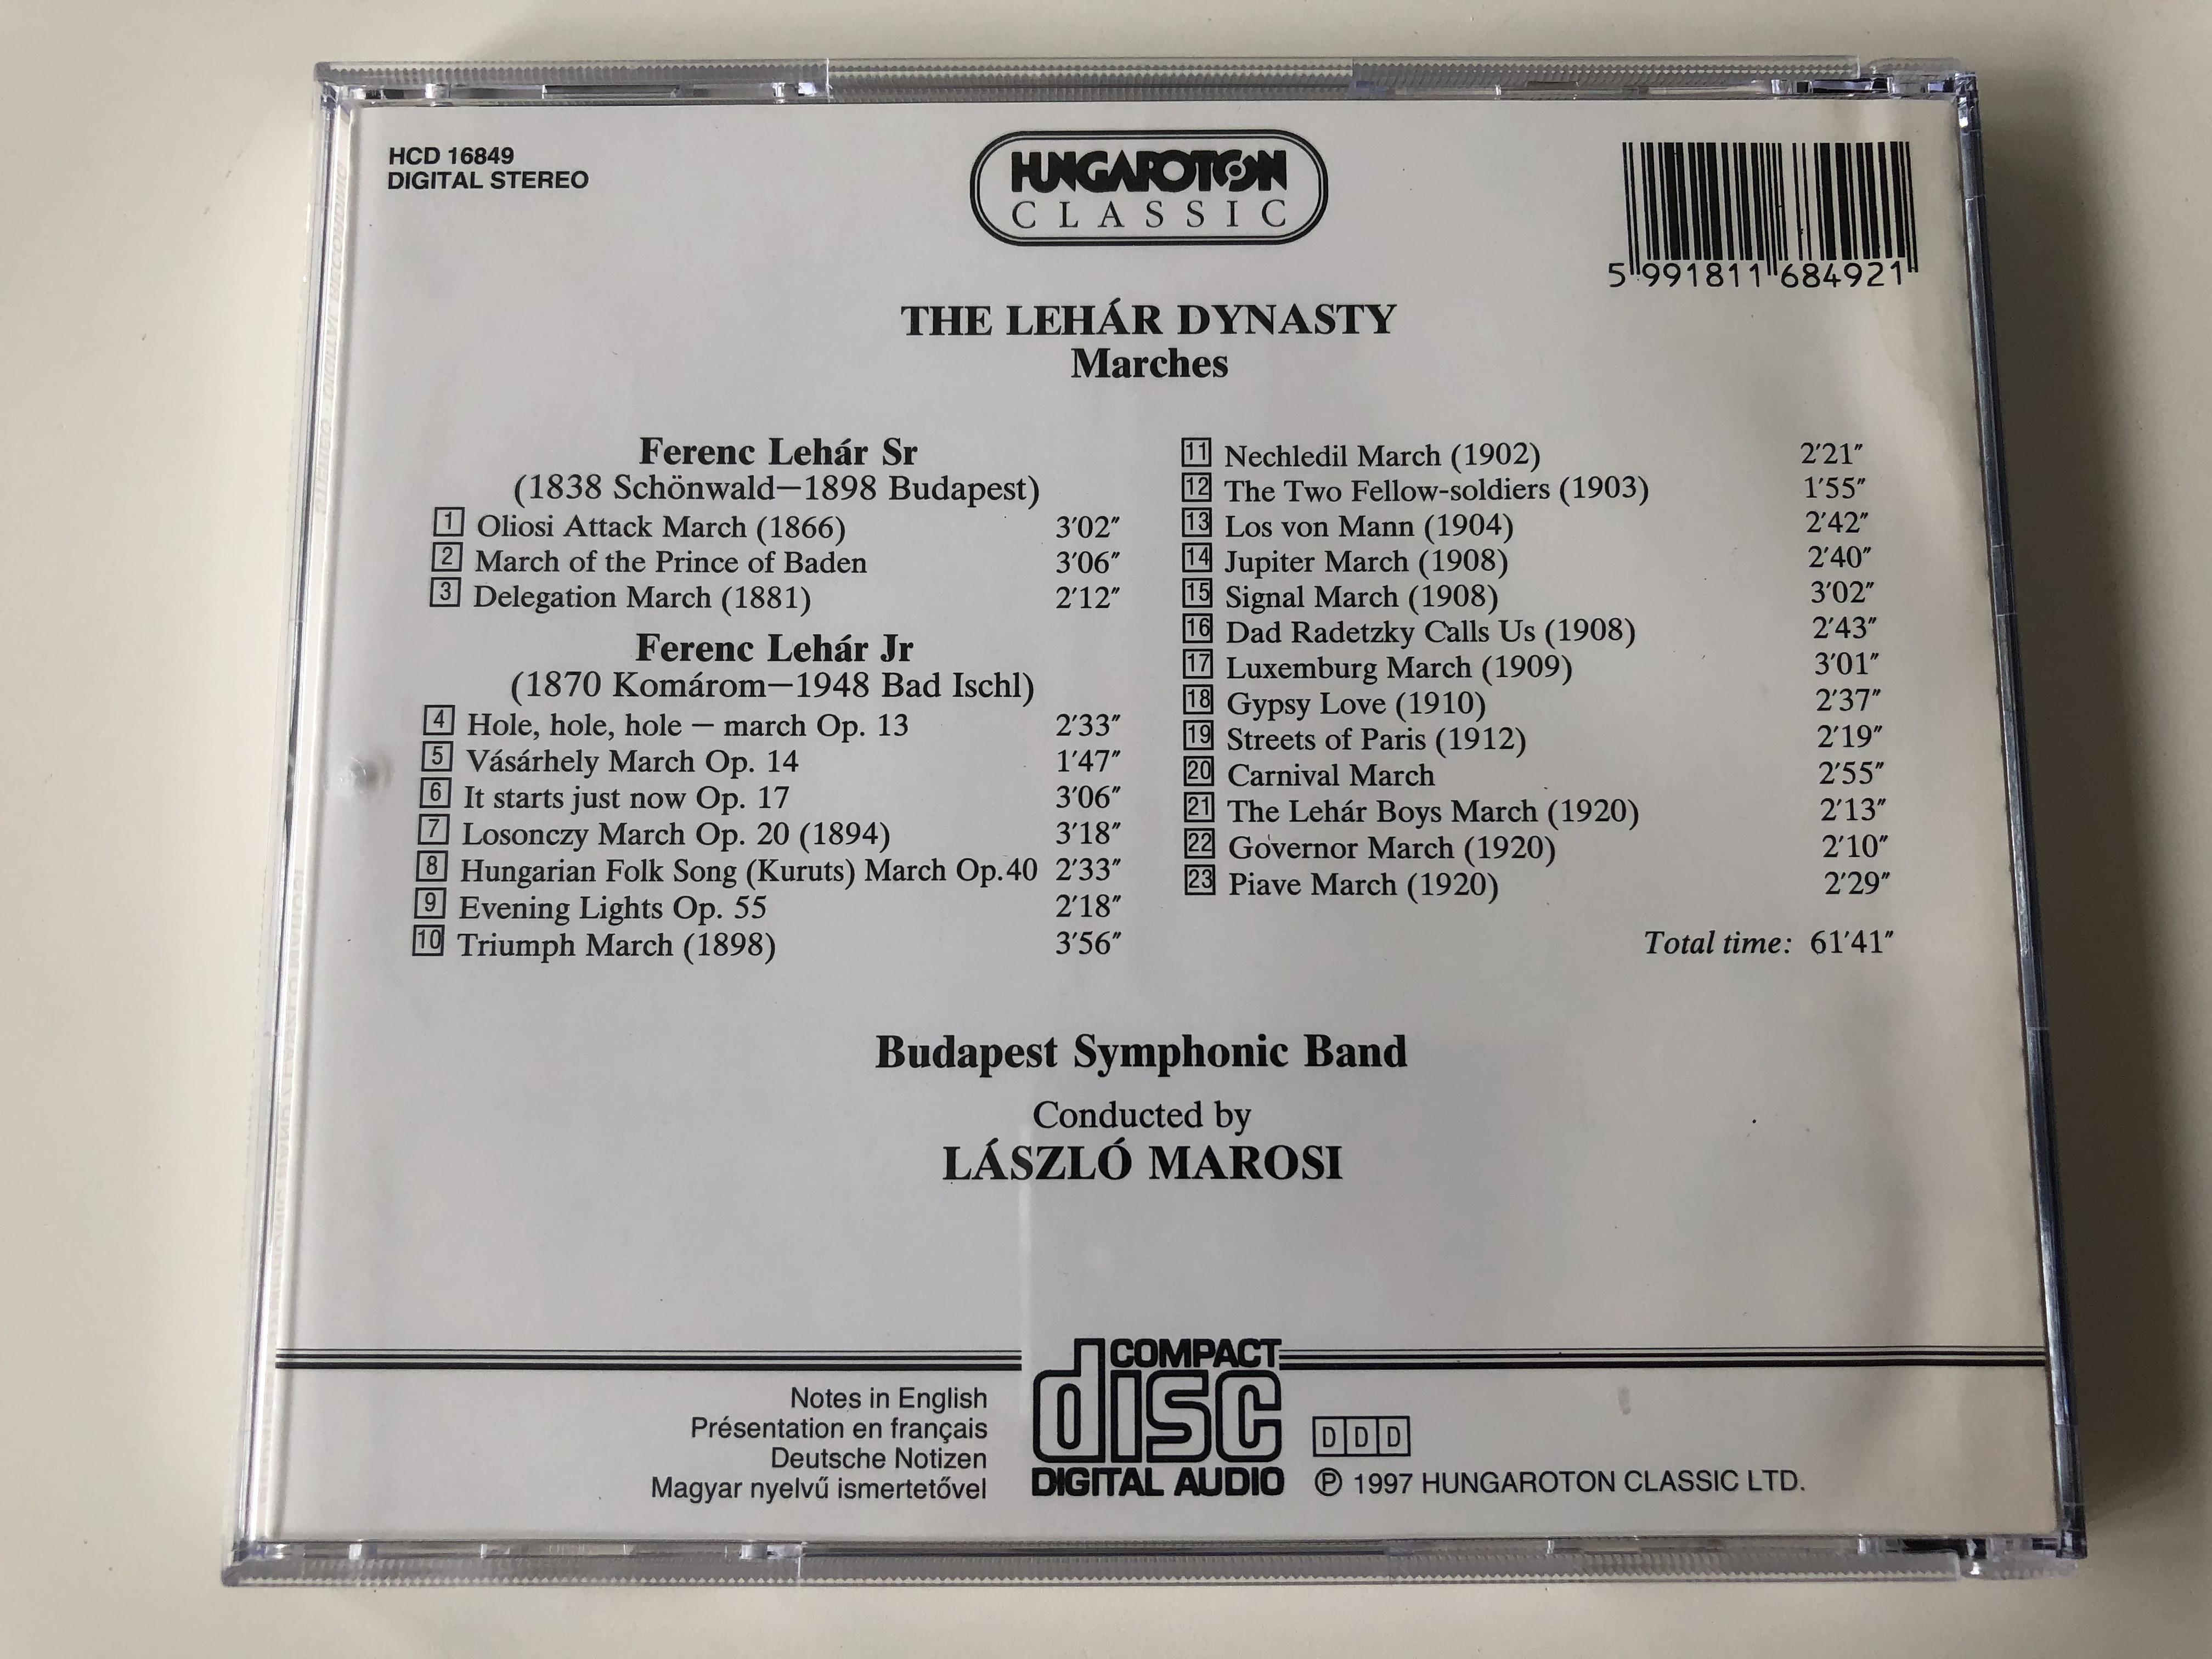 the-leh-r-dynasty-marches-budapest-symphonic-band-l-szl-marosi-hungaroton-classic-audio-cd-1997-stereo-hcd-16849-7-.jpg